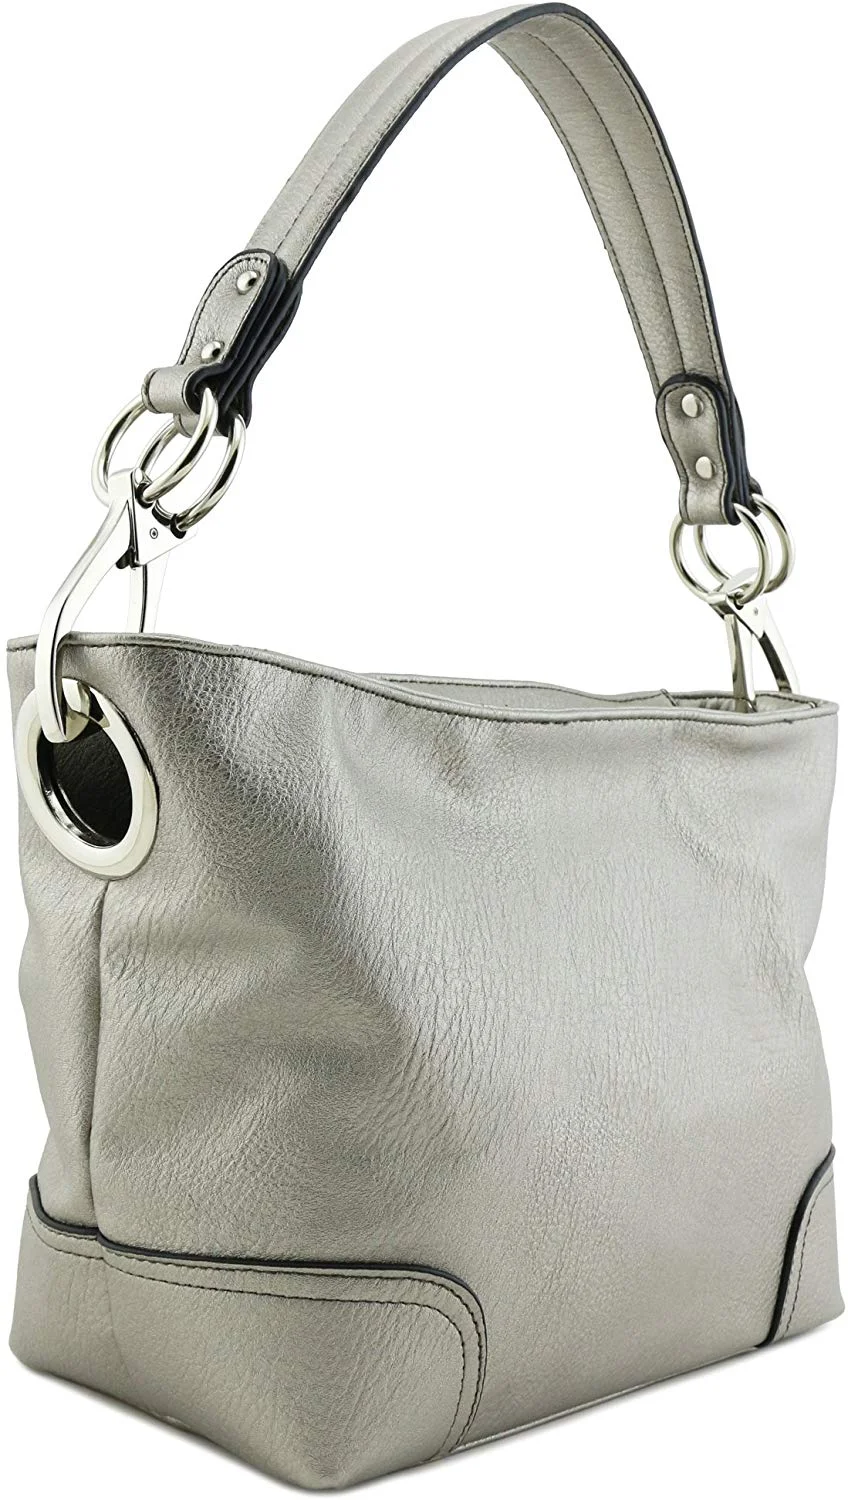 Hobo Shoulder Bag with Snap Hook Hardware Small